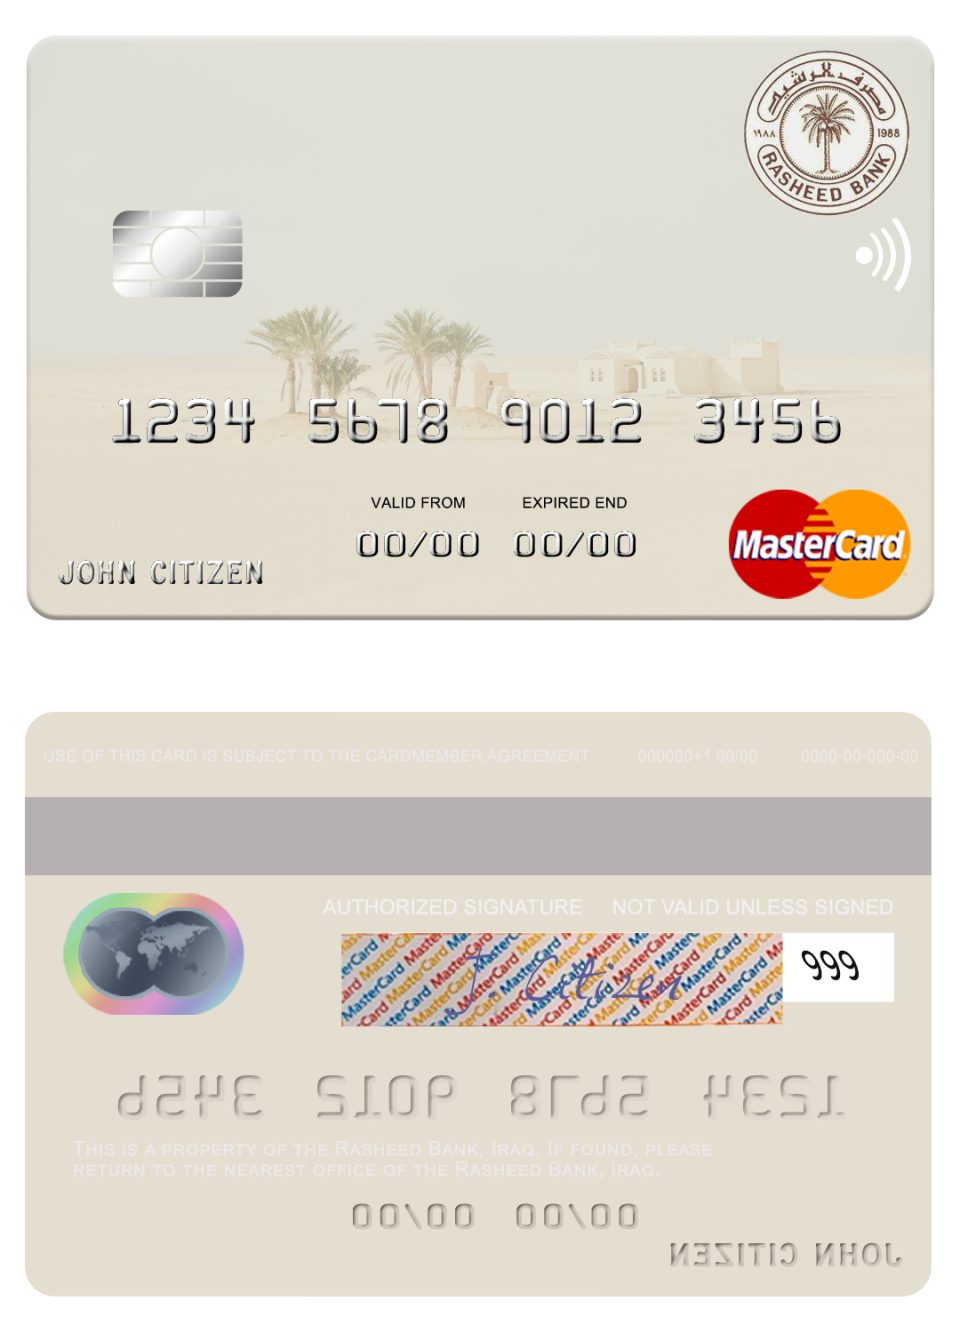 Editable Iraq Rasheed Bank mastercard Templates in PSD Format